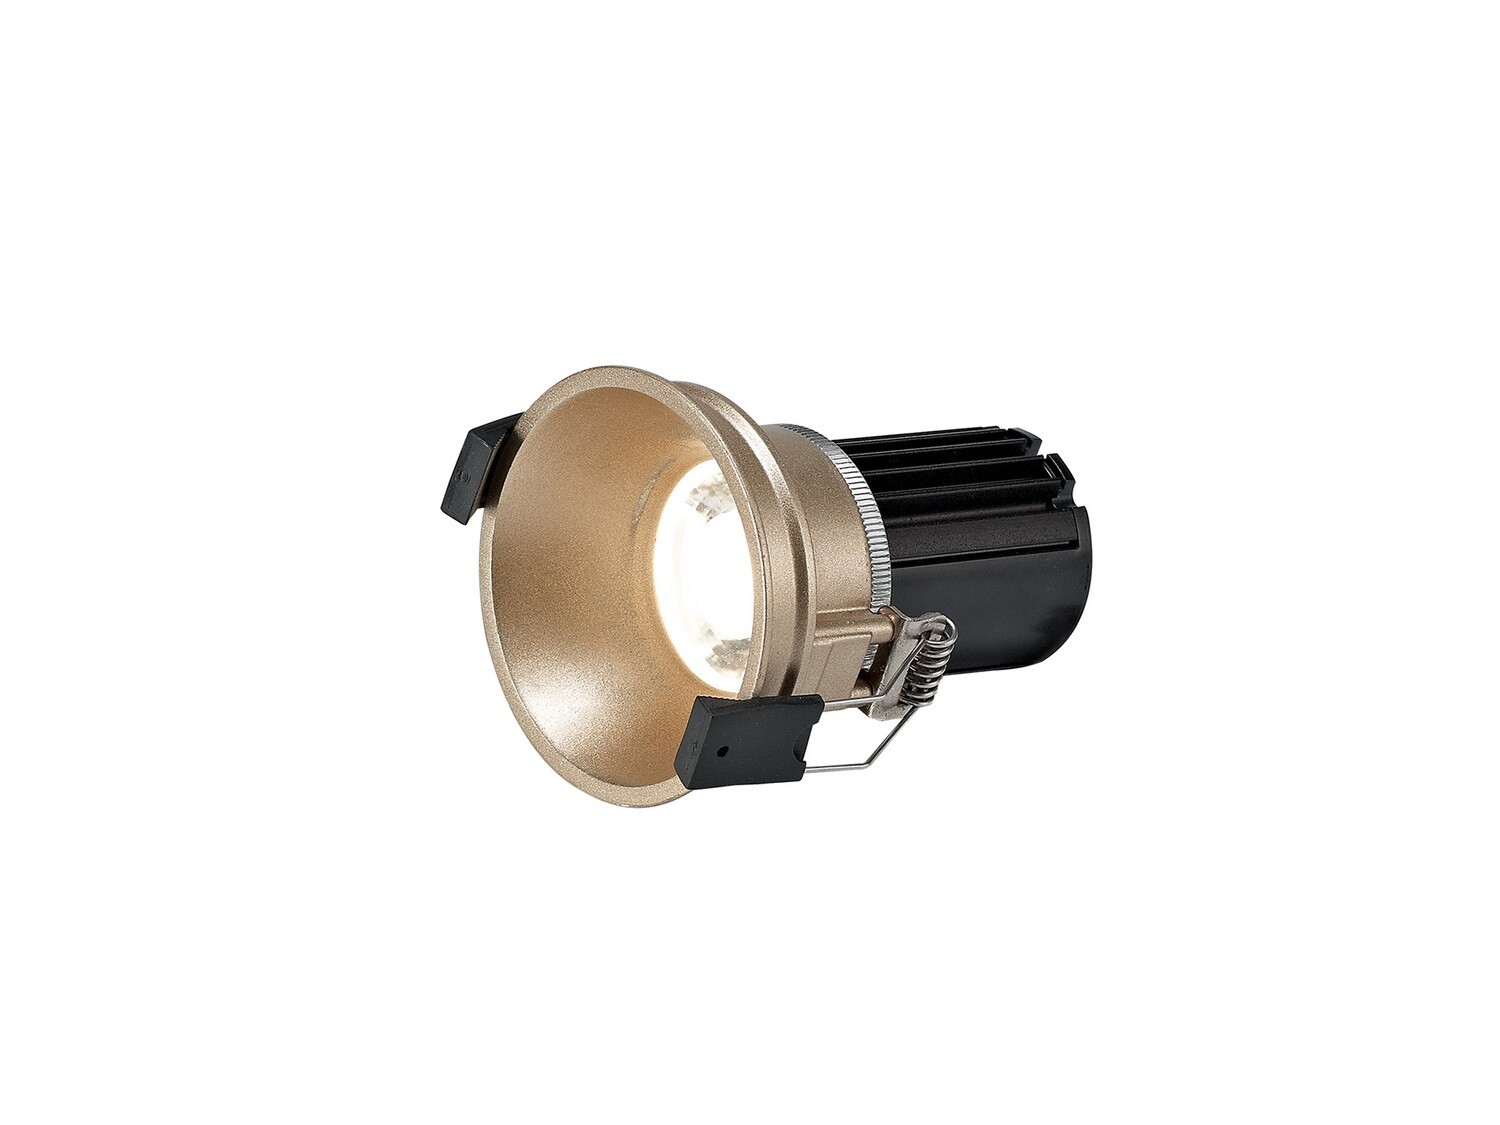 BANIA LED Spot-light 10W 810lm Gold